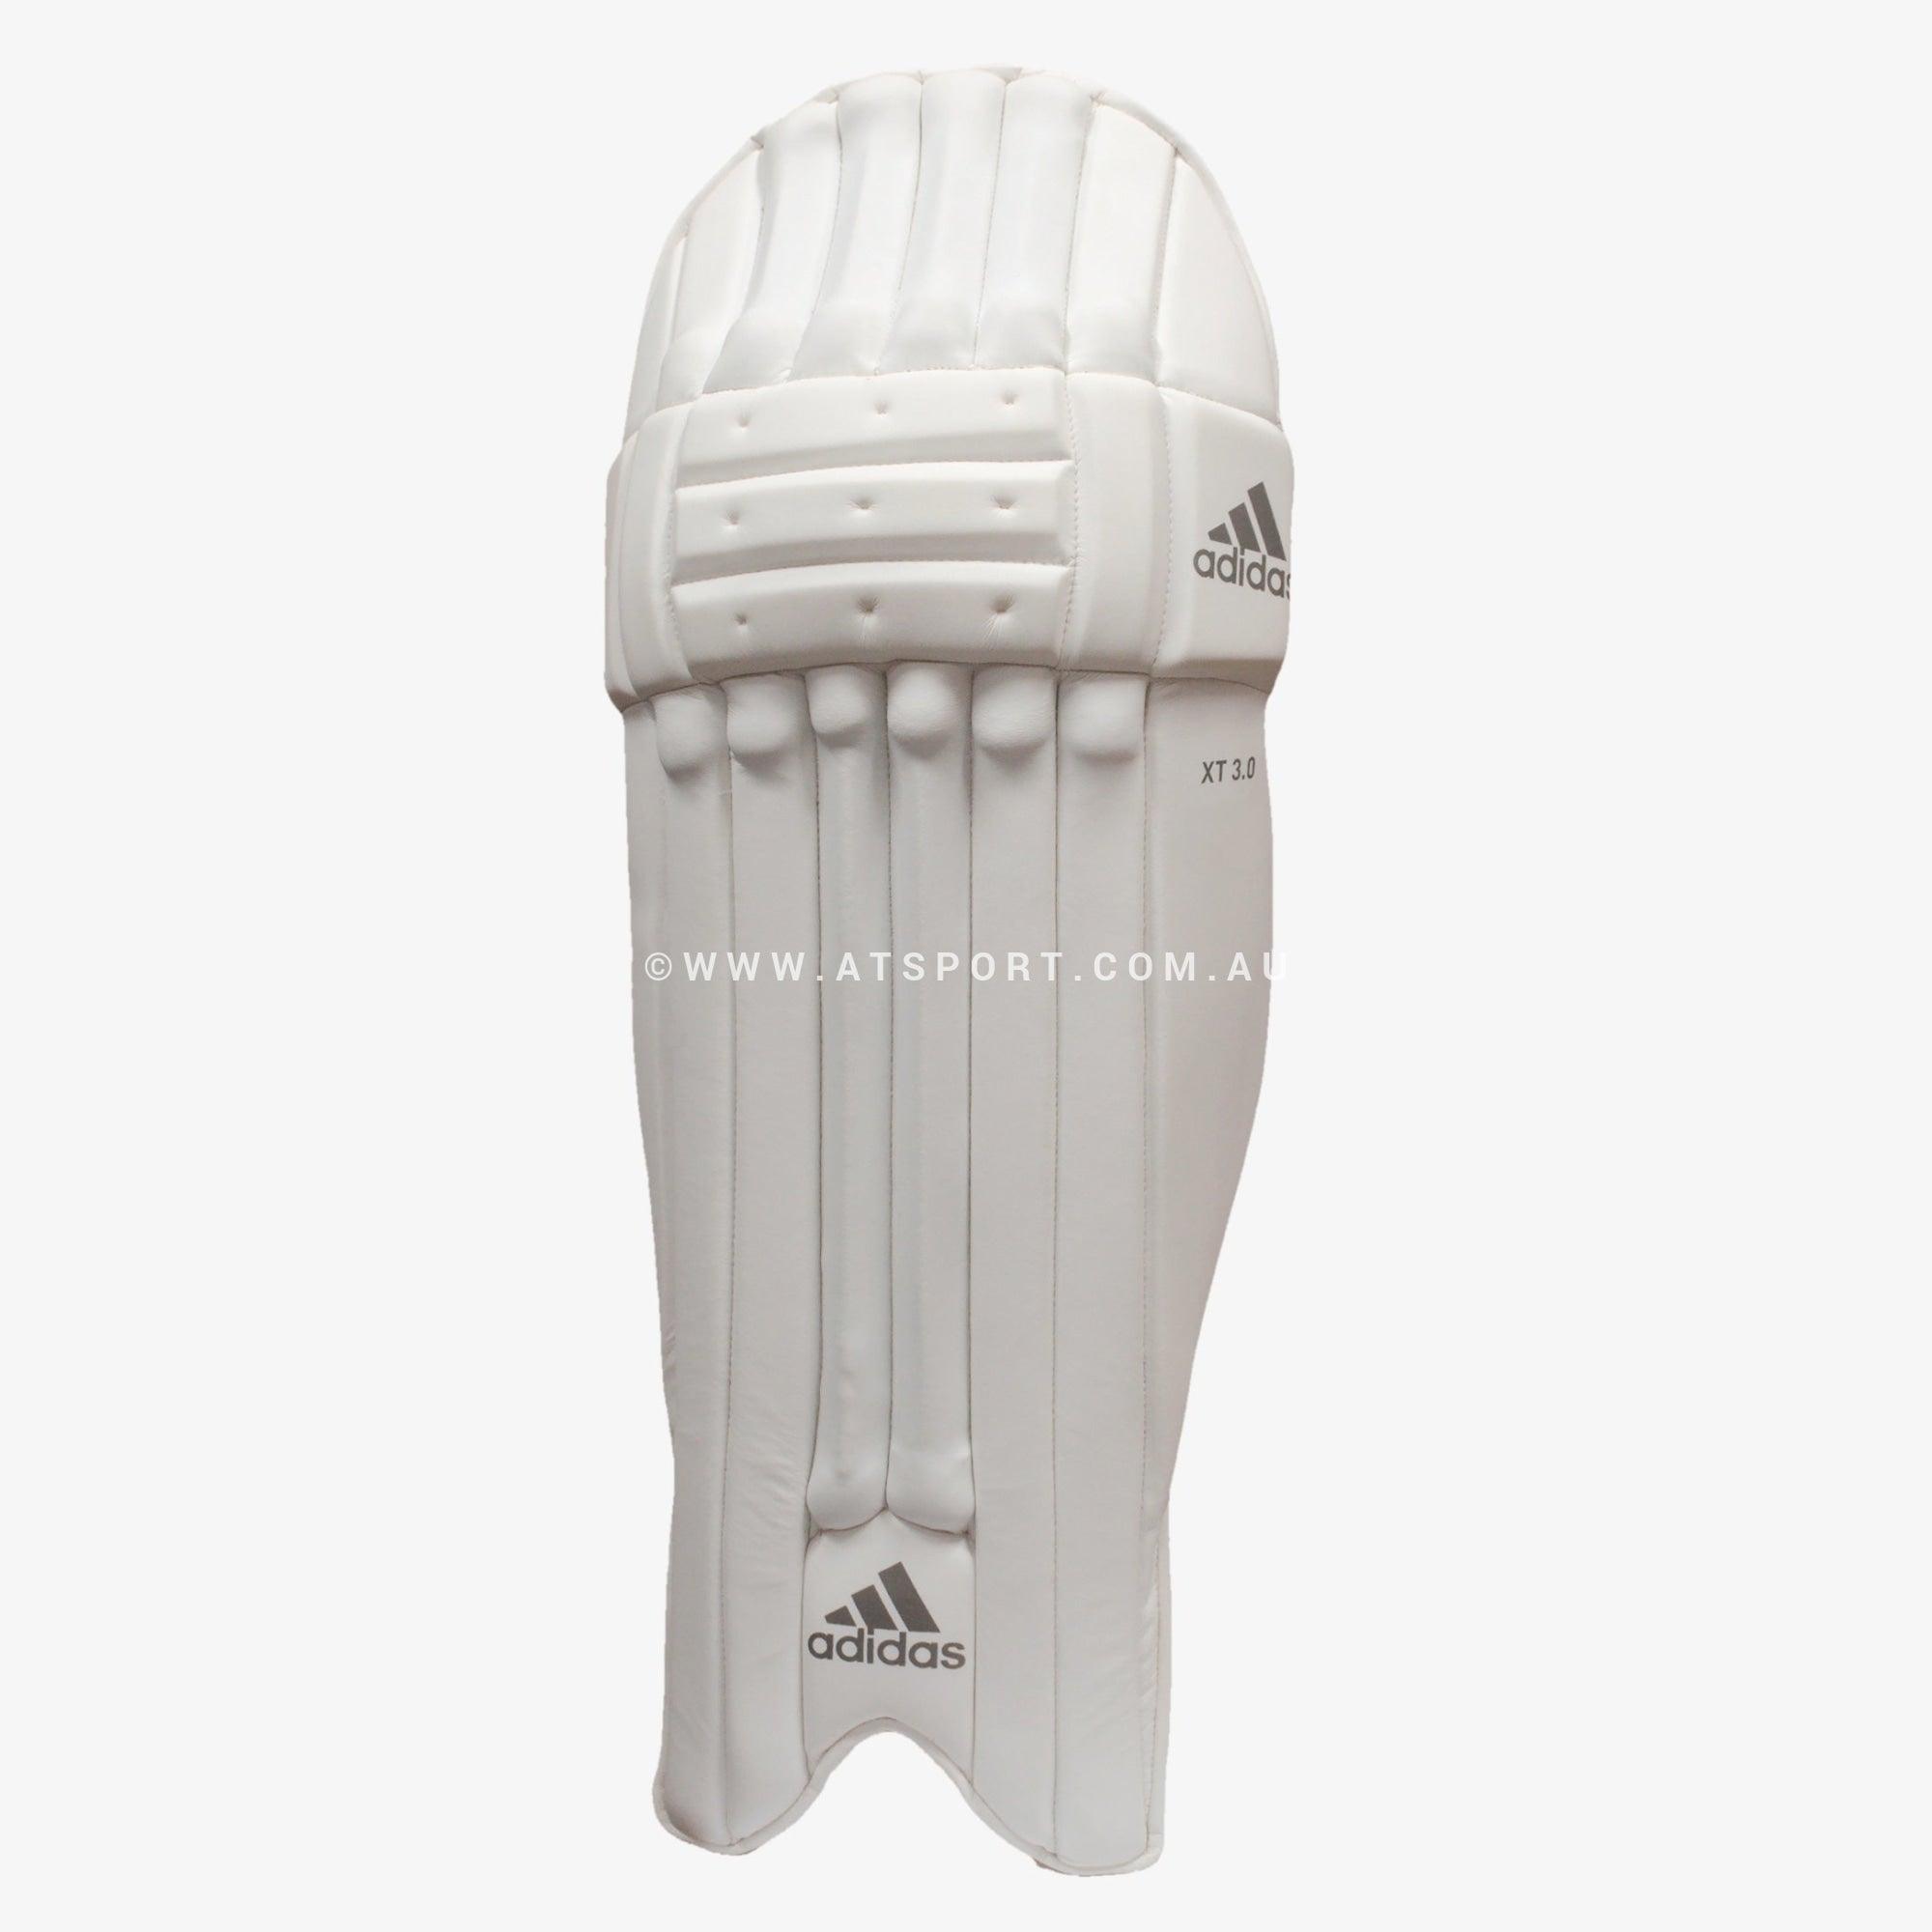 Adidas XT 3.0 Cricket Batting Pads - ADULT - AT Sports